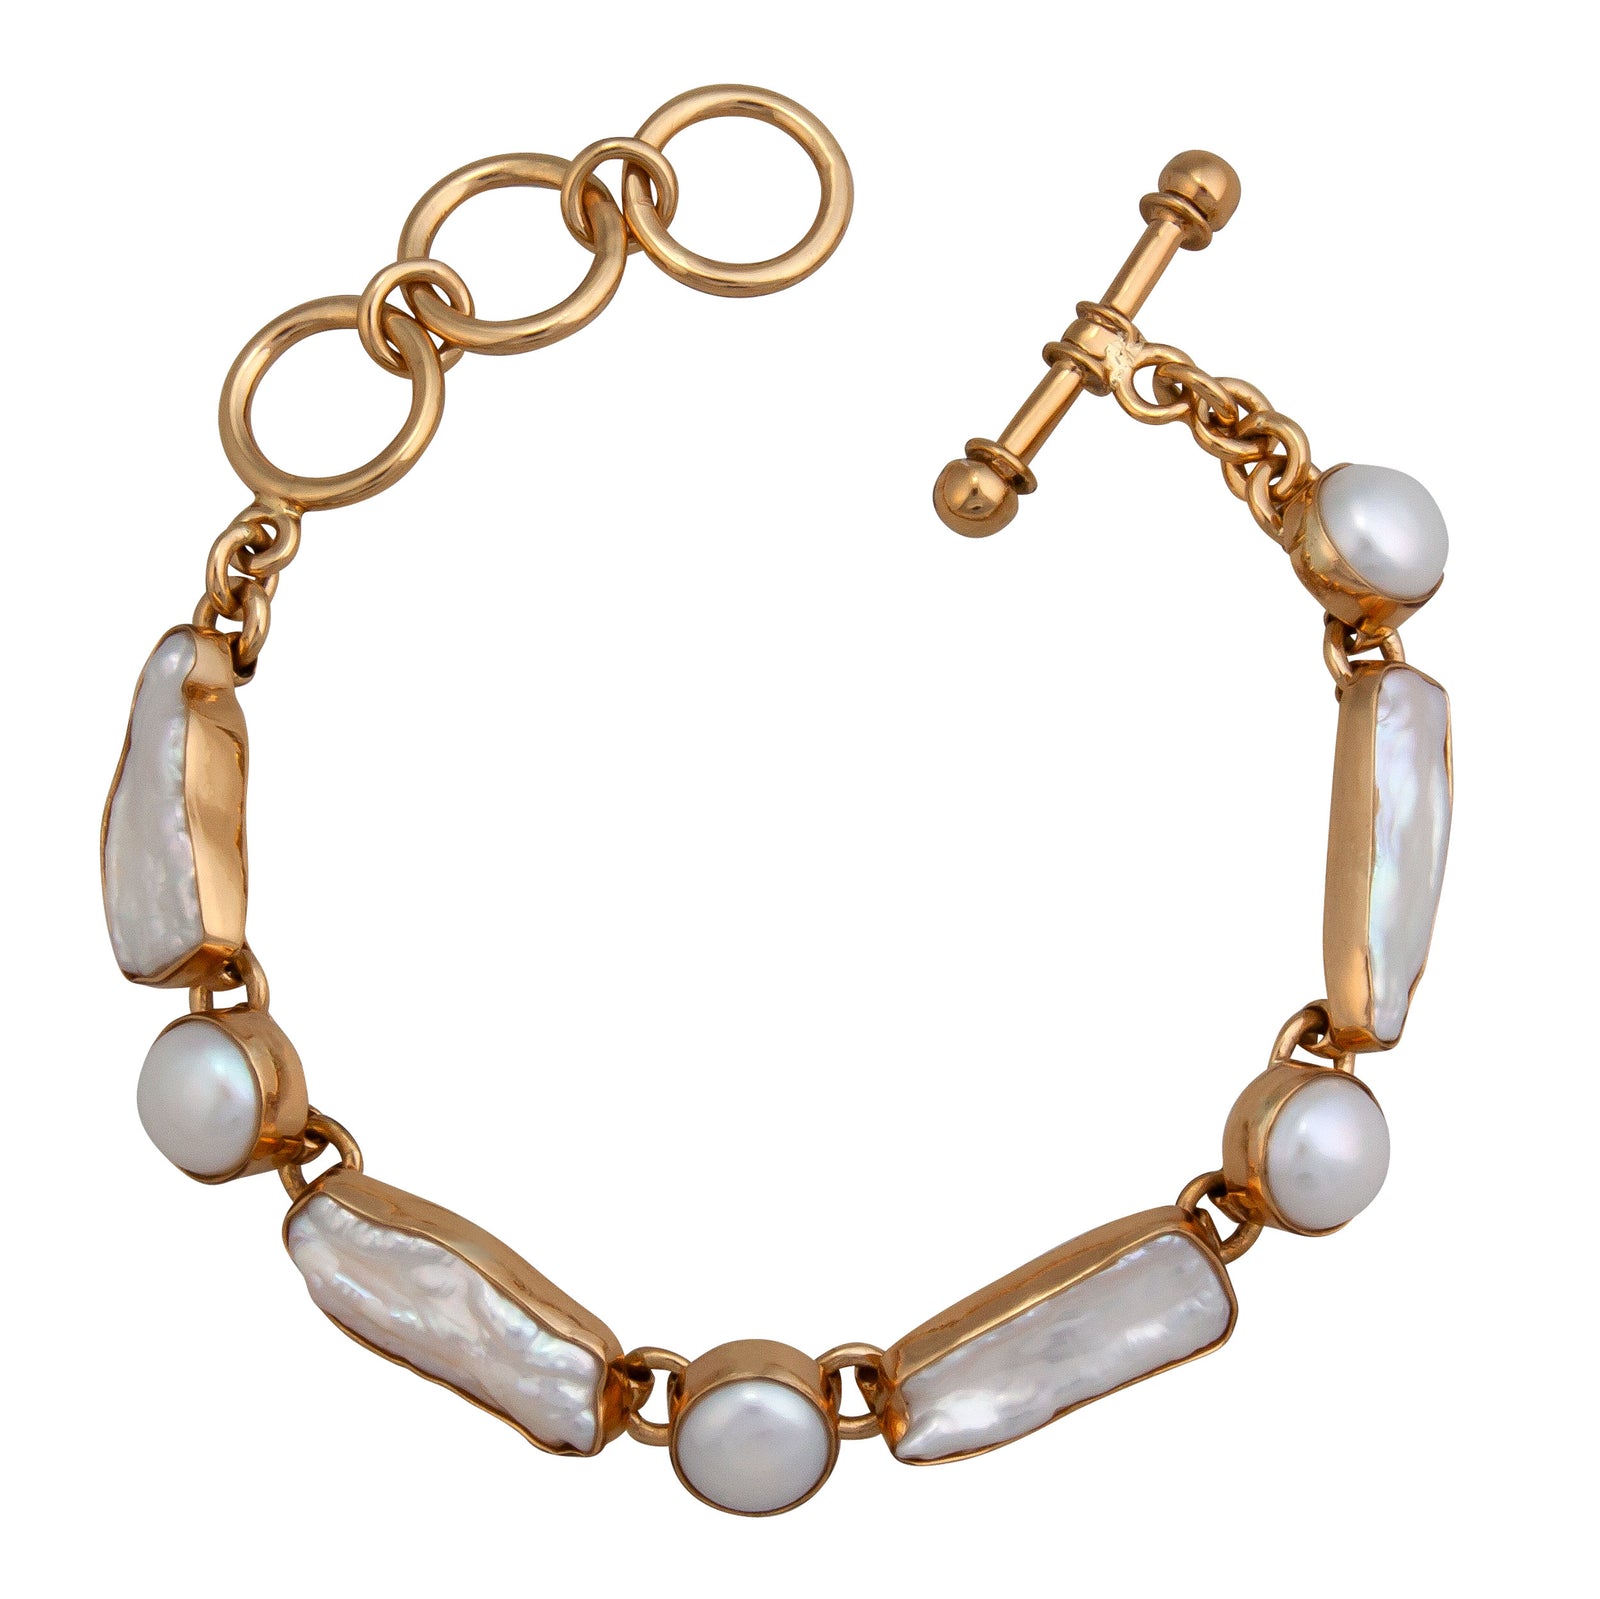 Alchemia Pearl and Biwa Pearl Bracelet